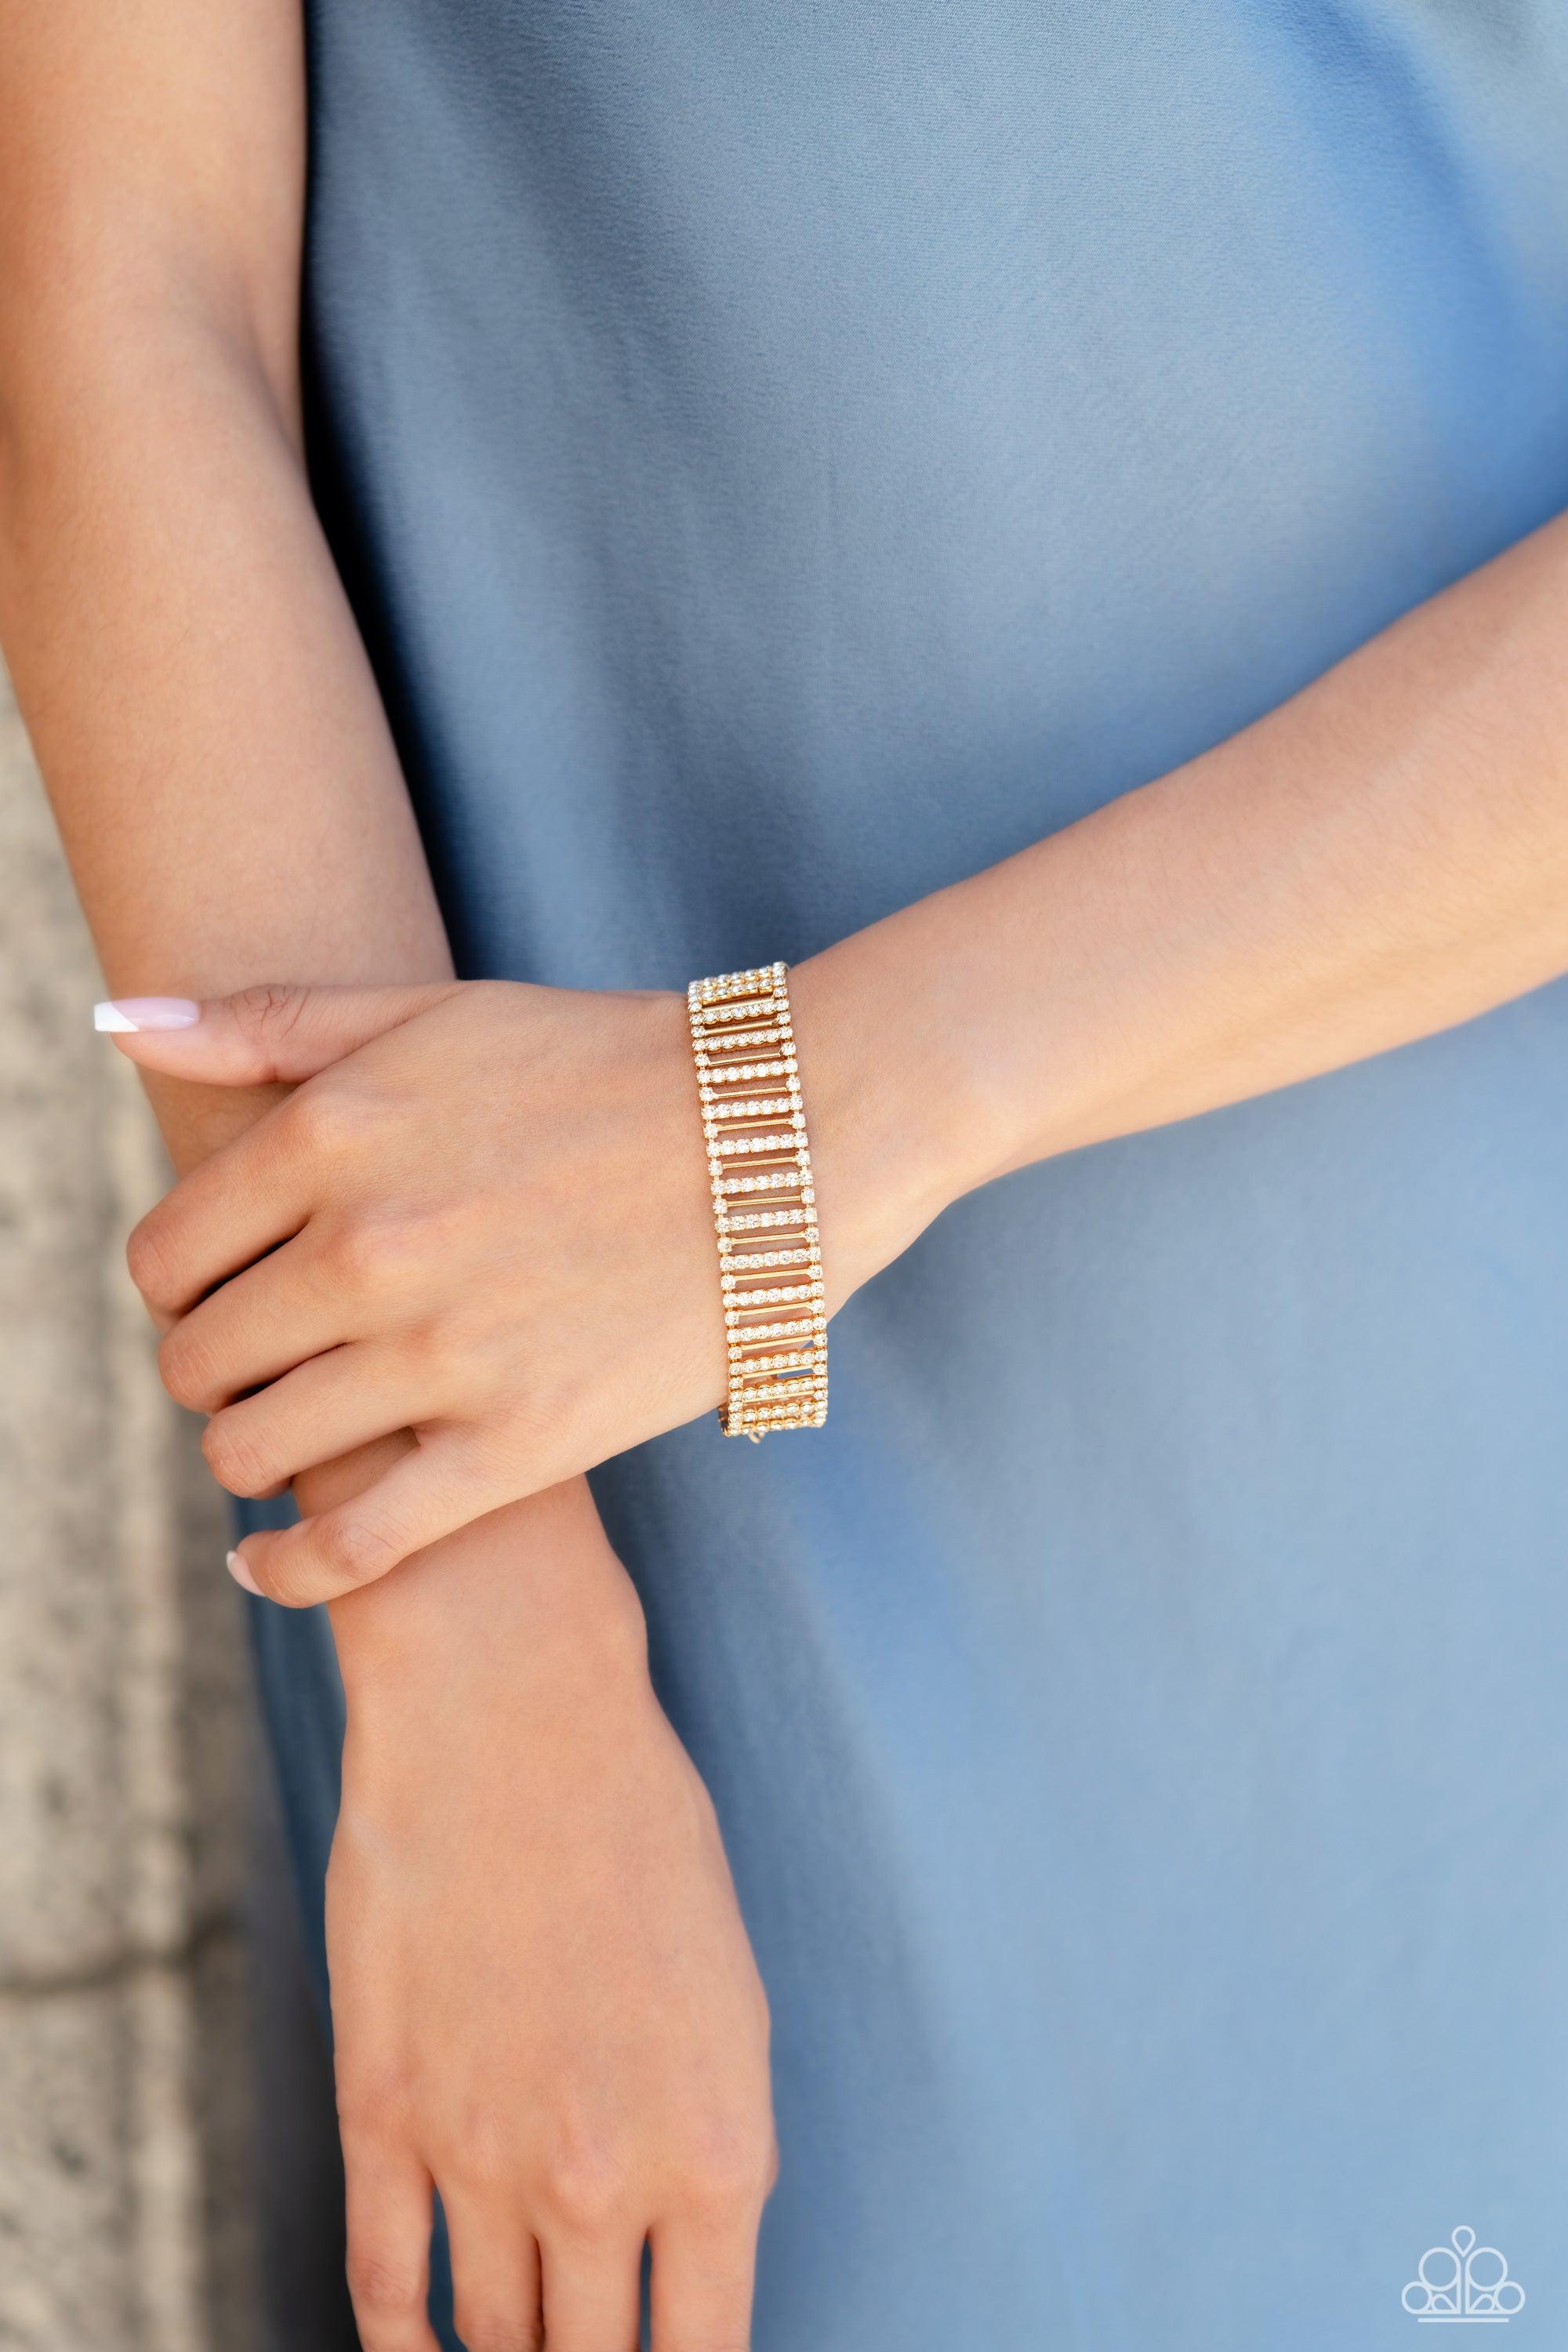 Elusive Elegance Gold & White Rhinestone Bracelet - Paparazzi Accessories- lightbox - CarasShop.com - $5 Jewelry by Cara Jewels